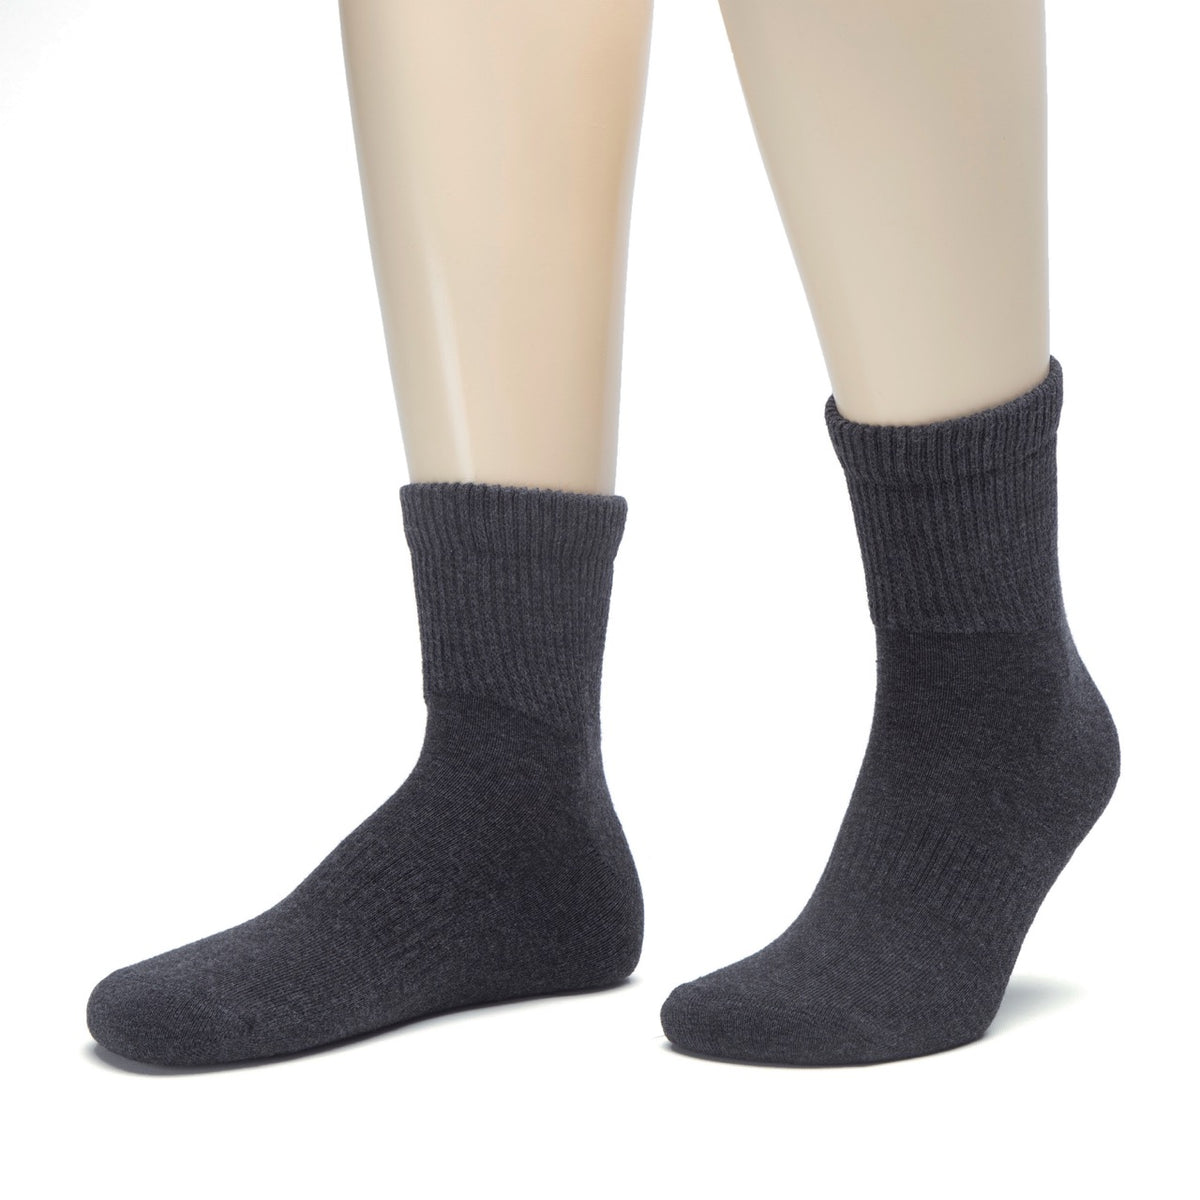 Men's Diabetic Ankle Semi-Cushion Cotton Socks, 3 Pairs